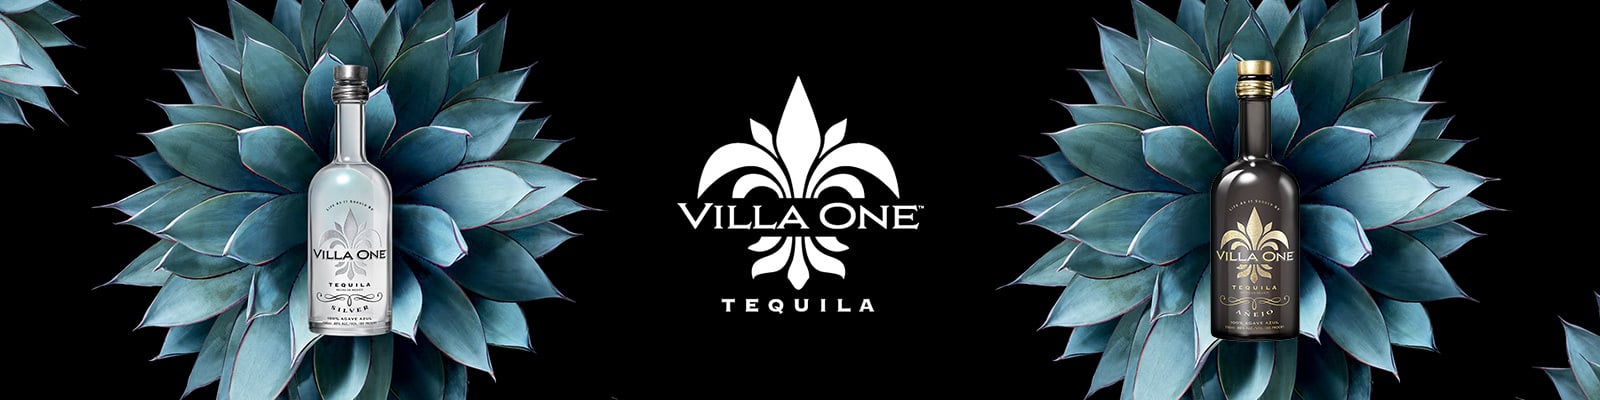 Villa One Tequila